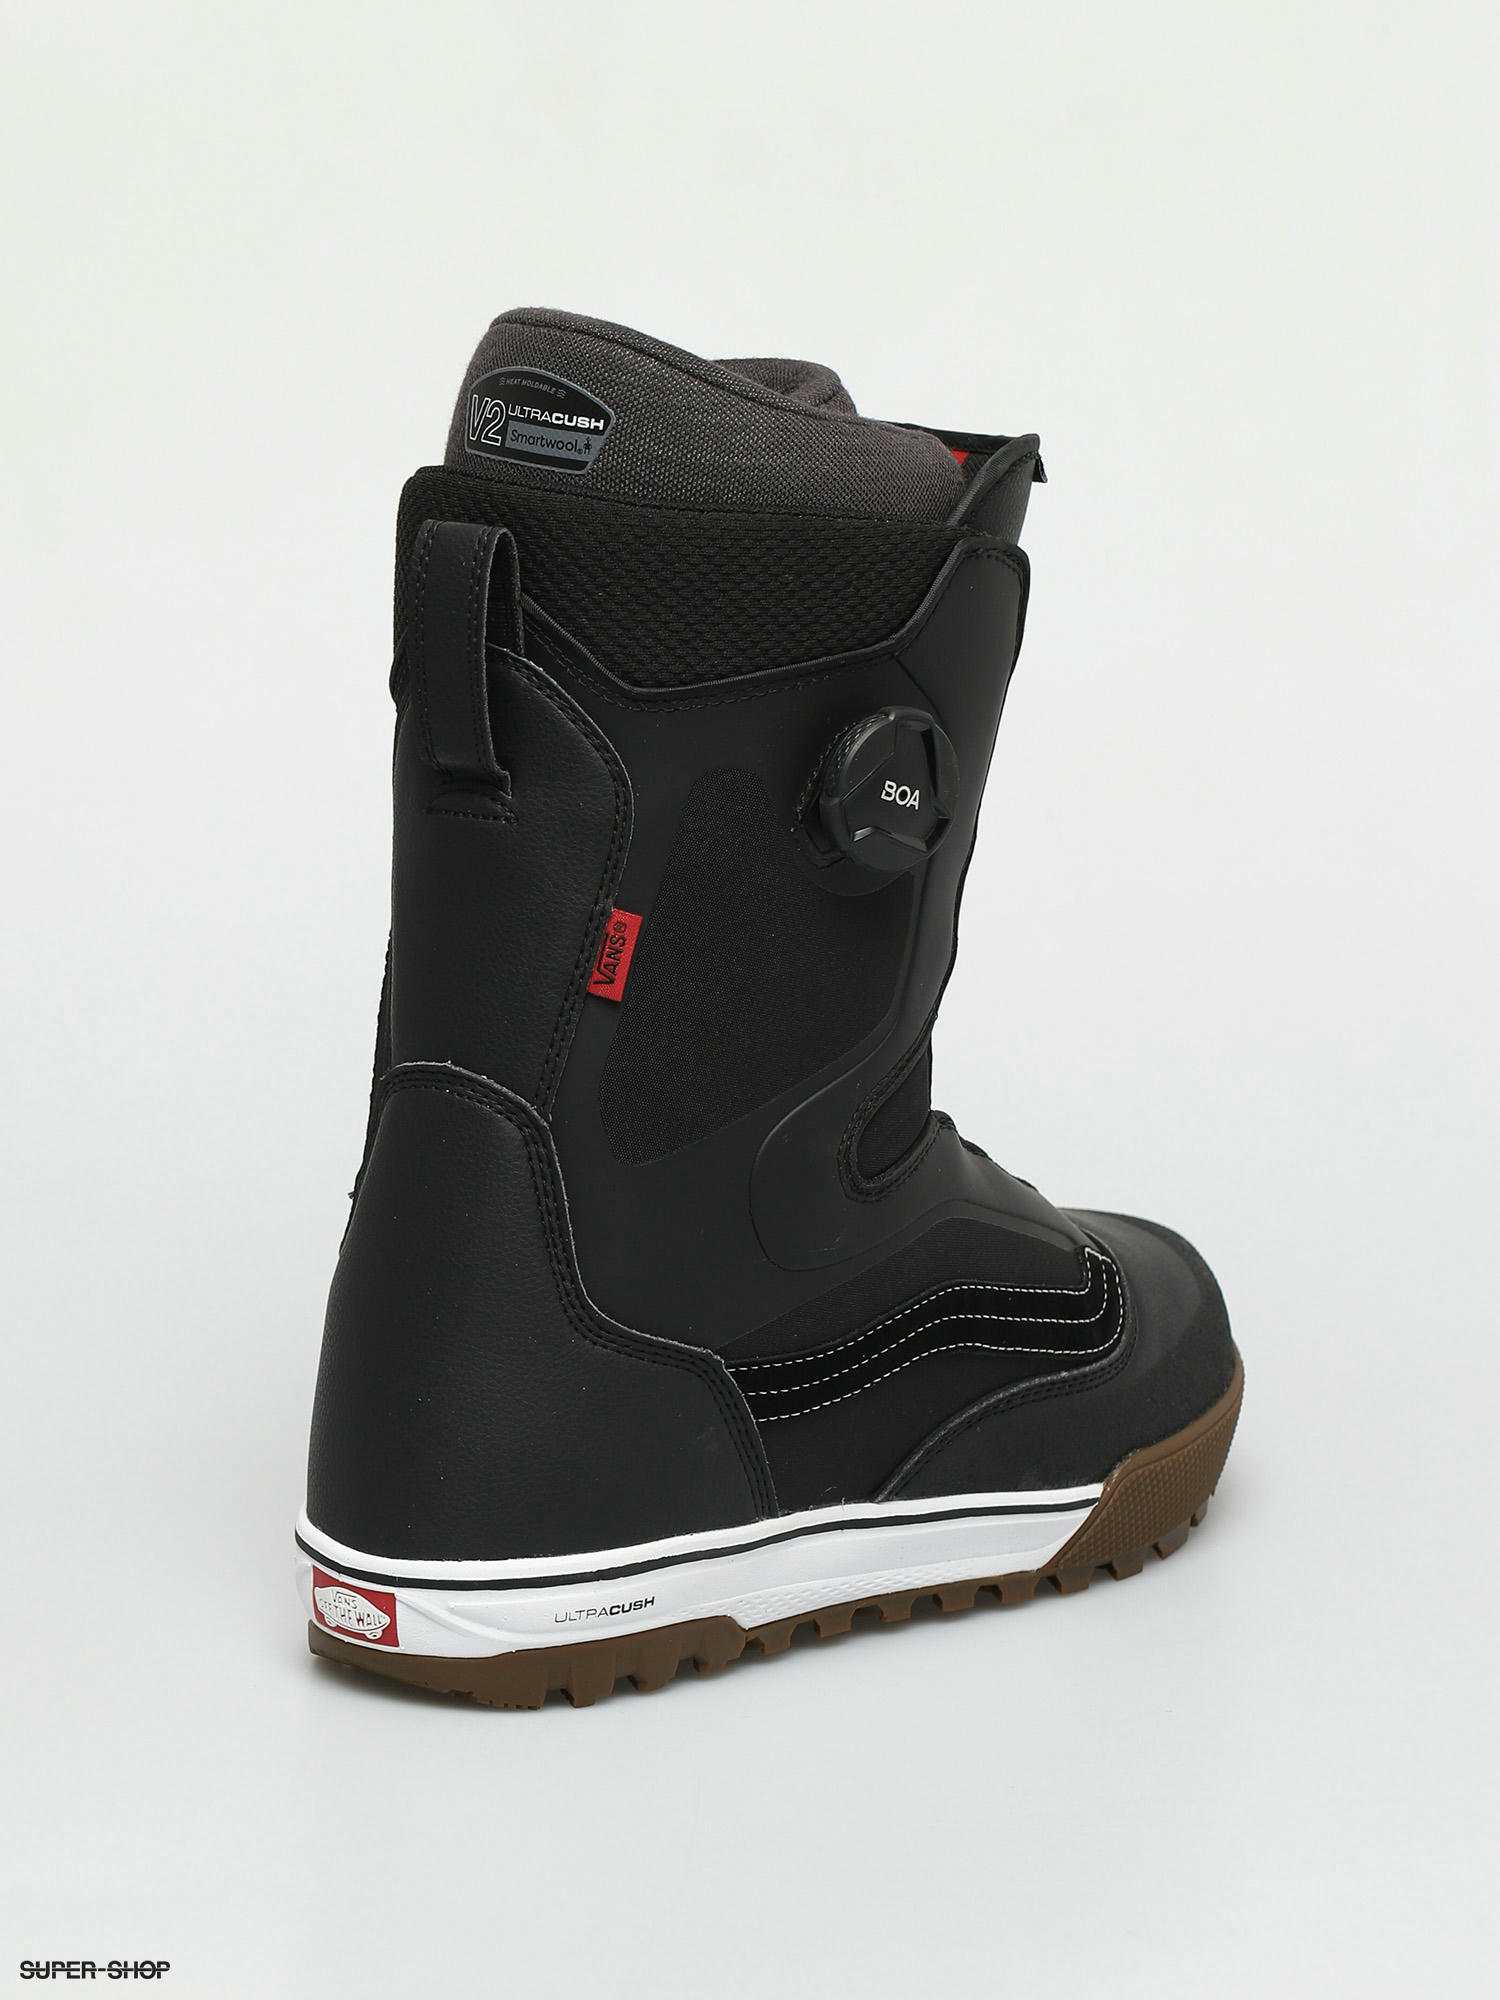 vans aura pro snowboard boots